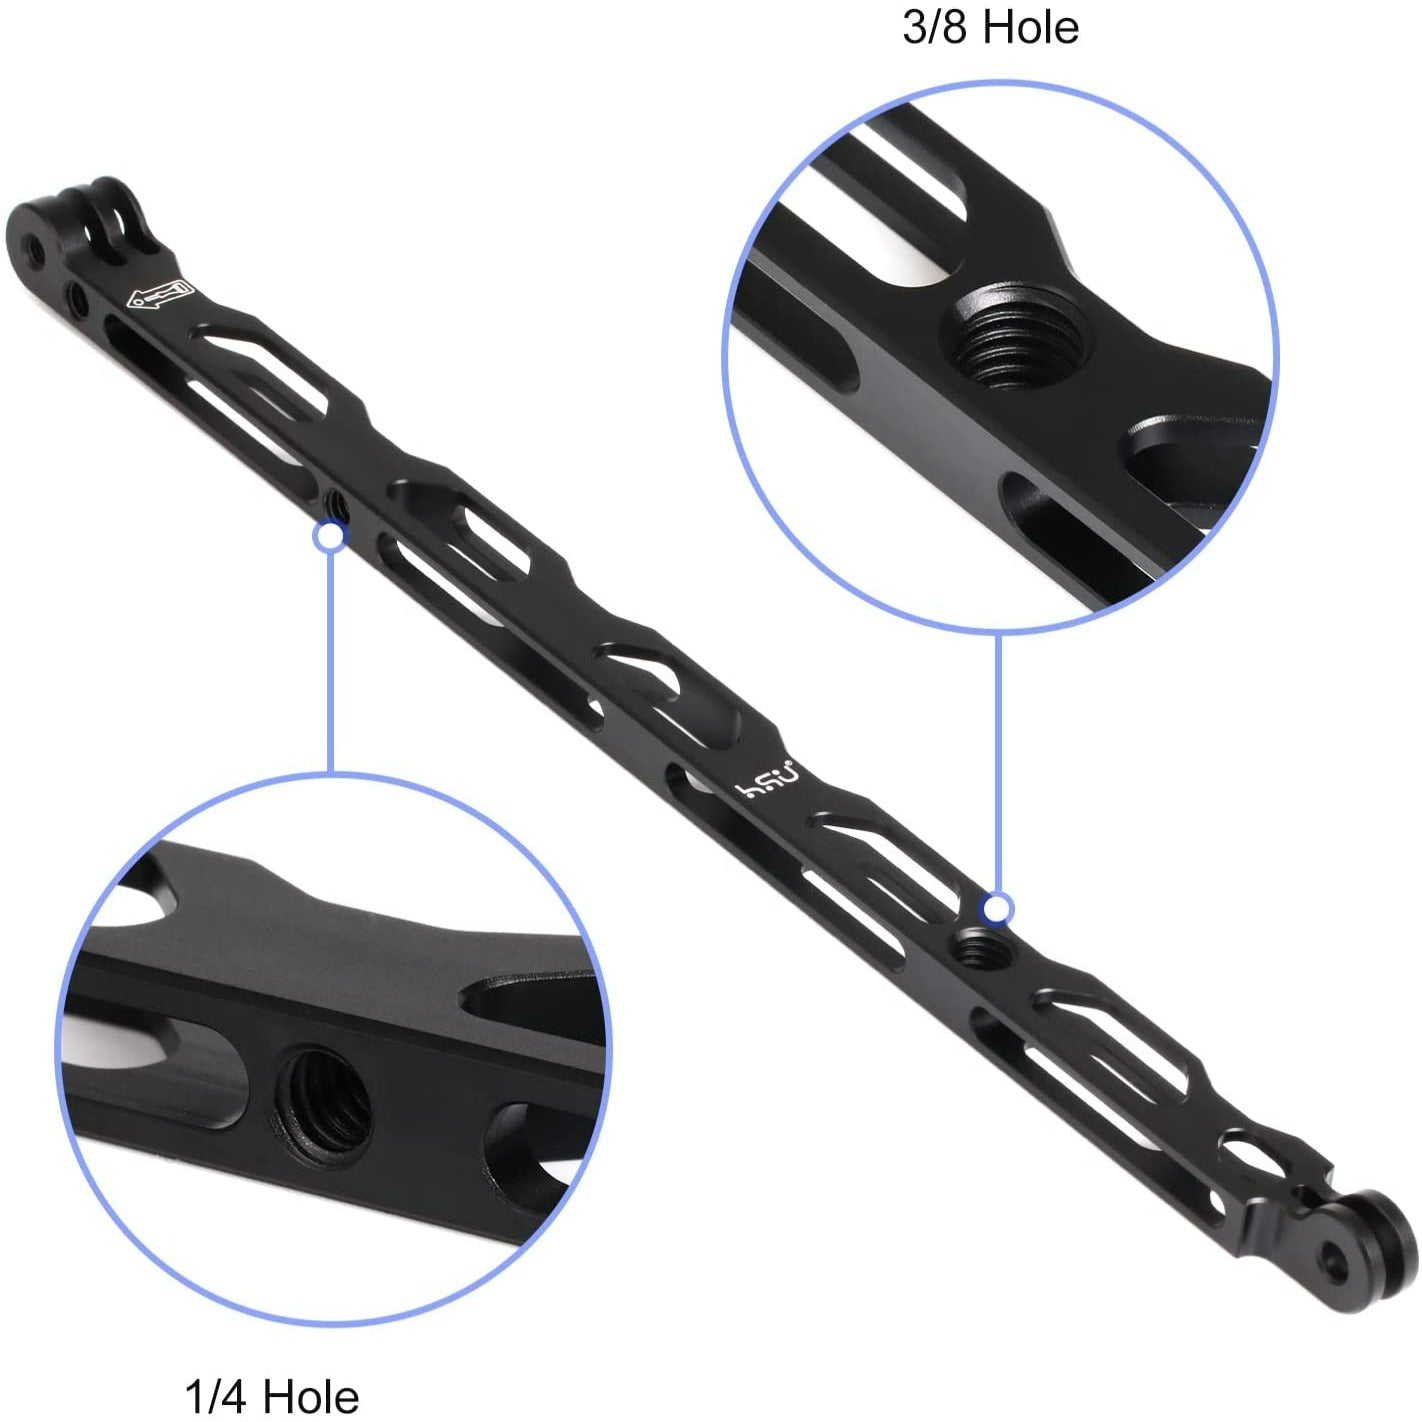 (7 Pcs) HSU All Aluminum Alloy GoPro Hero Extension Arm Kit for GoPro/DJI